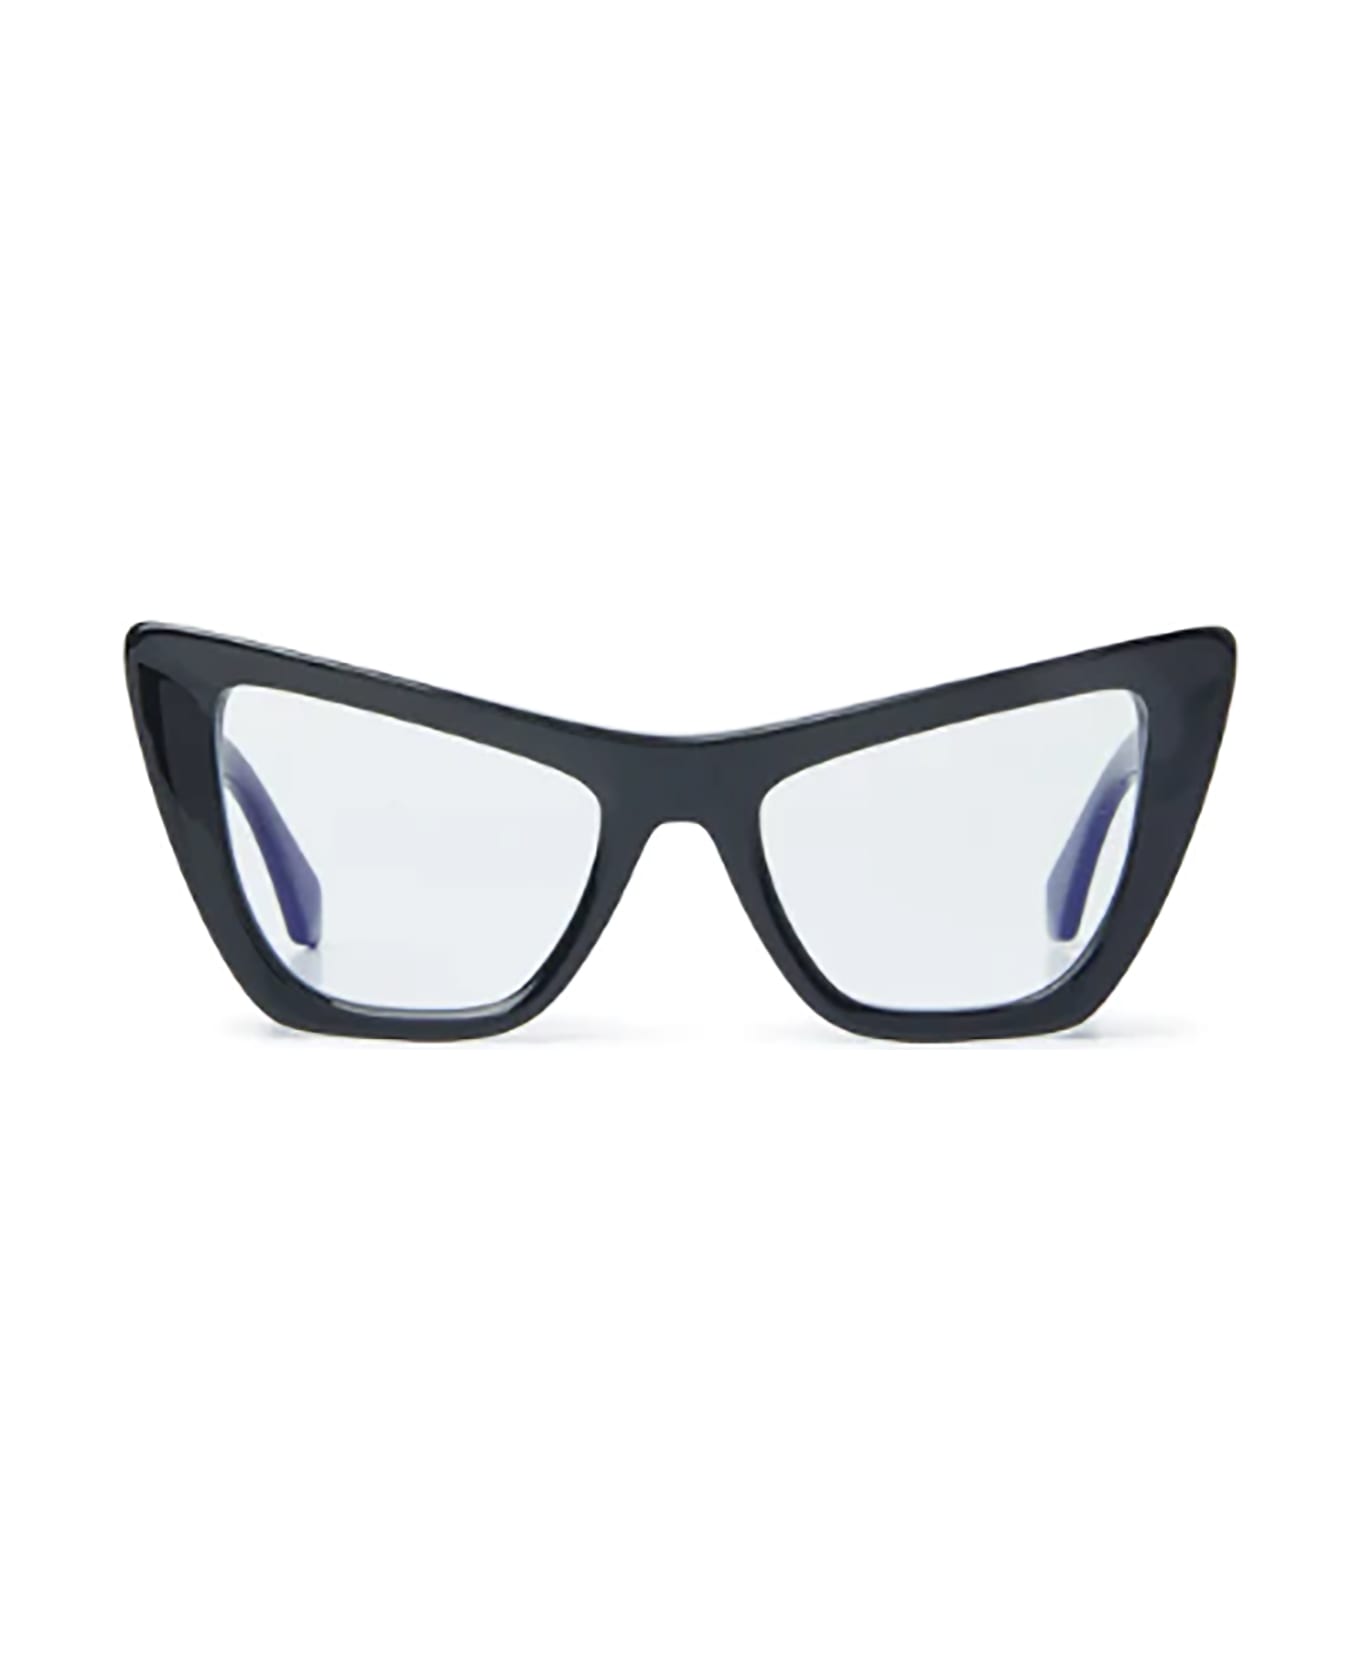 Off-White AF OPTICAL 11 BLACK BLUE BLOCK Eyewear - Black